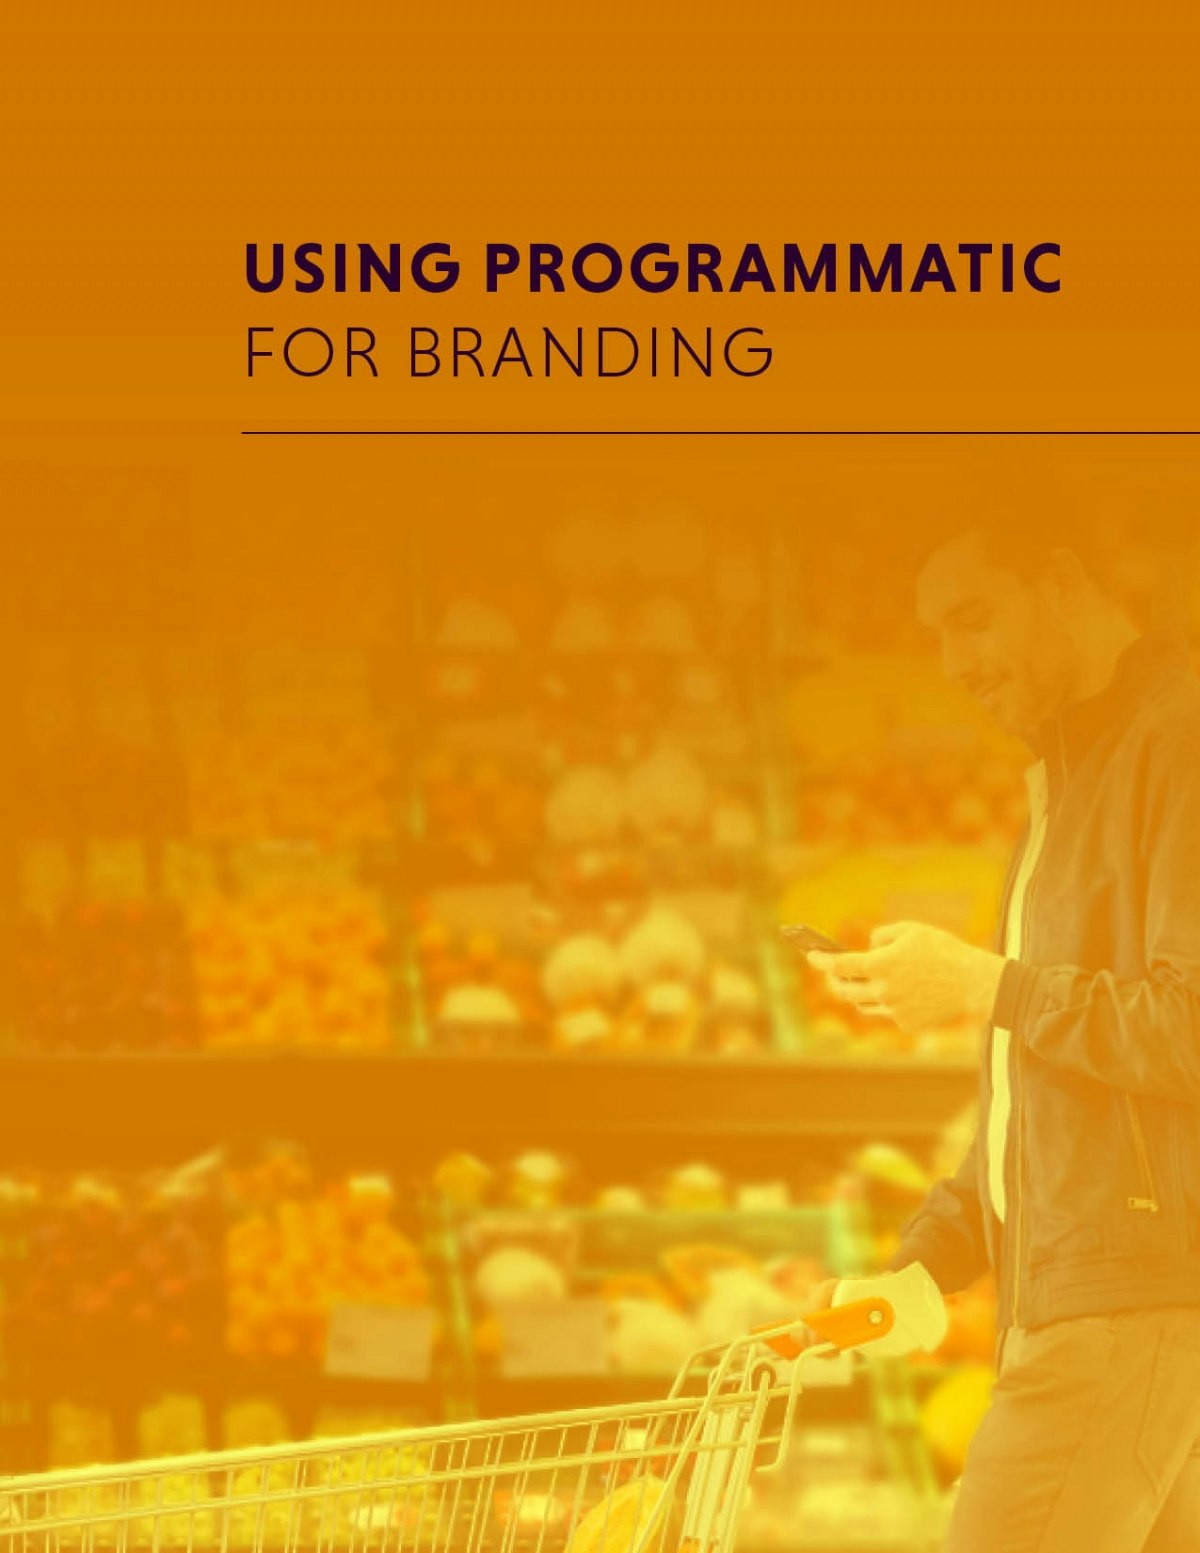 Using programmatic for branding